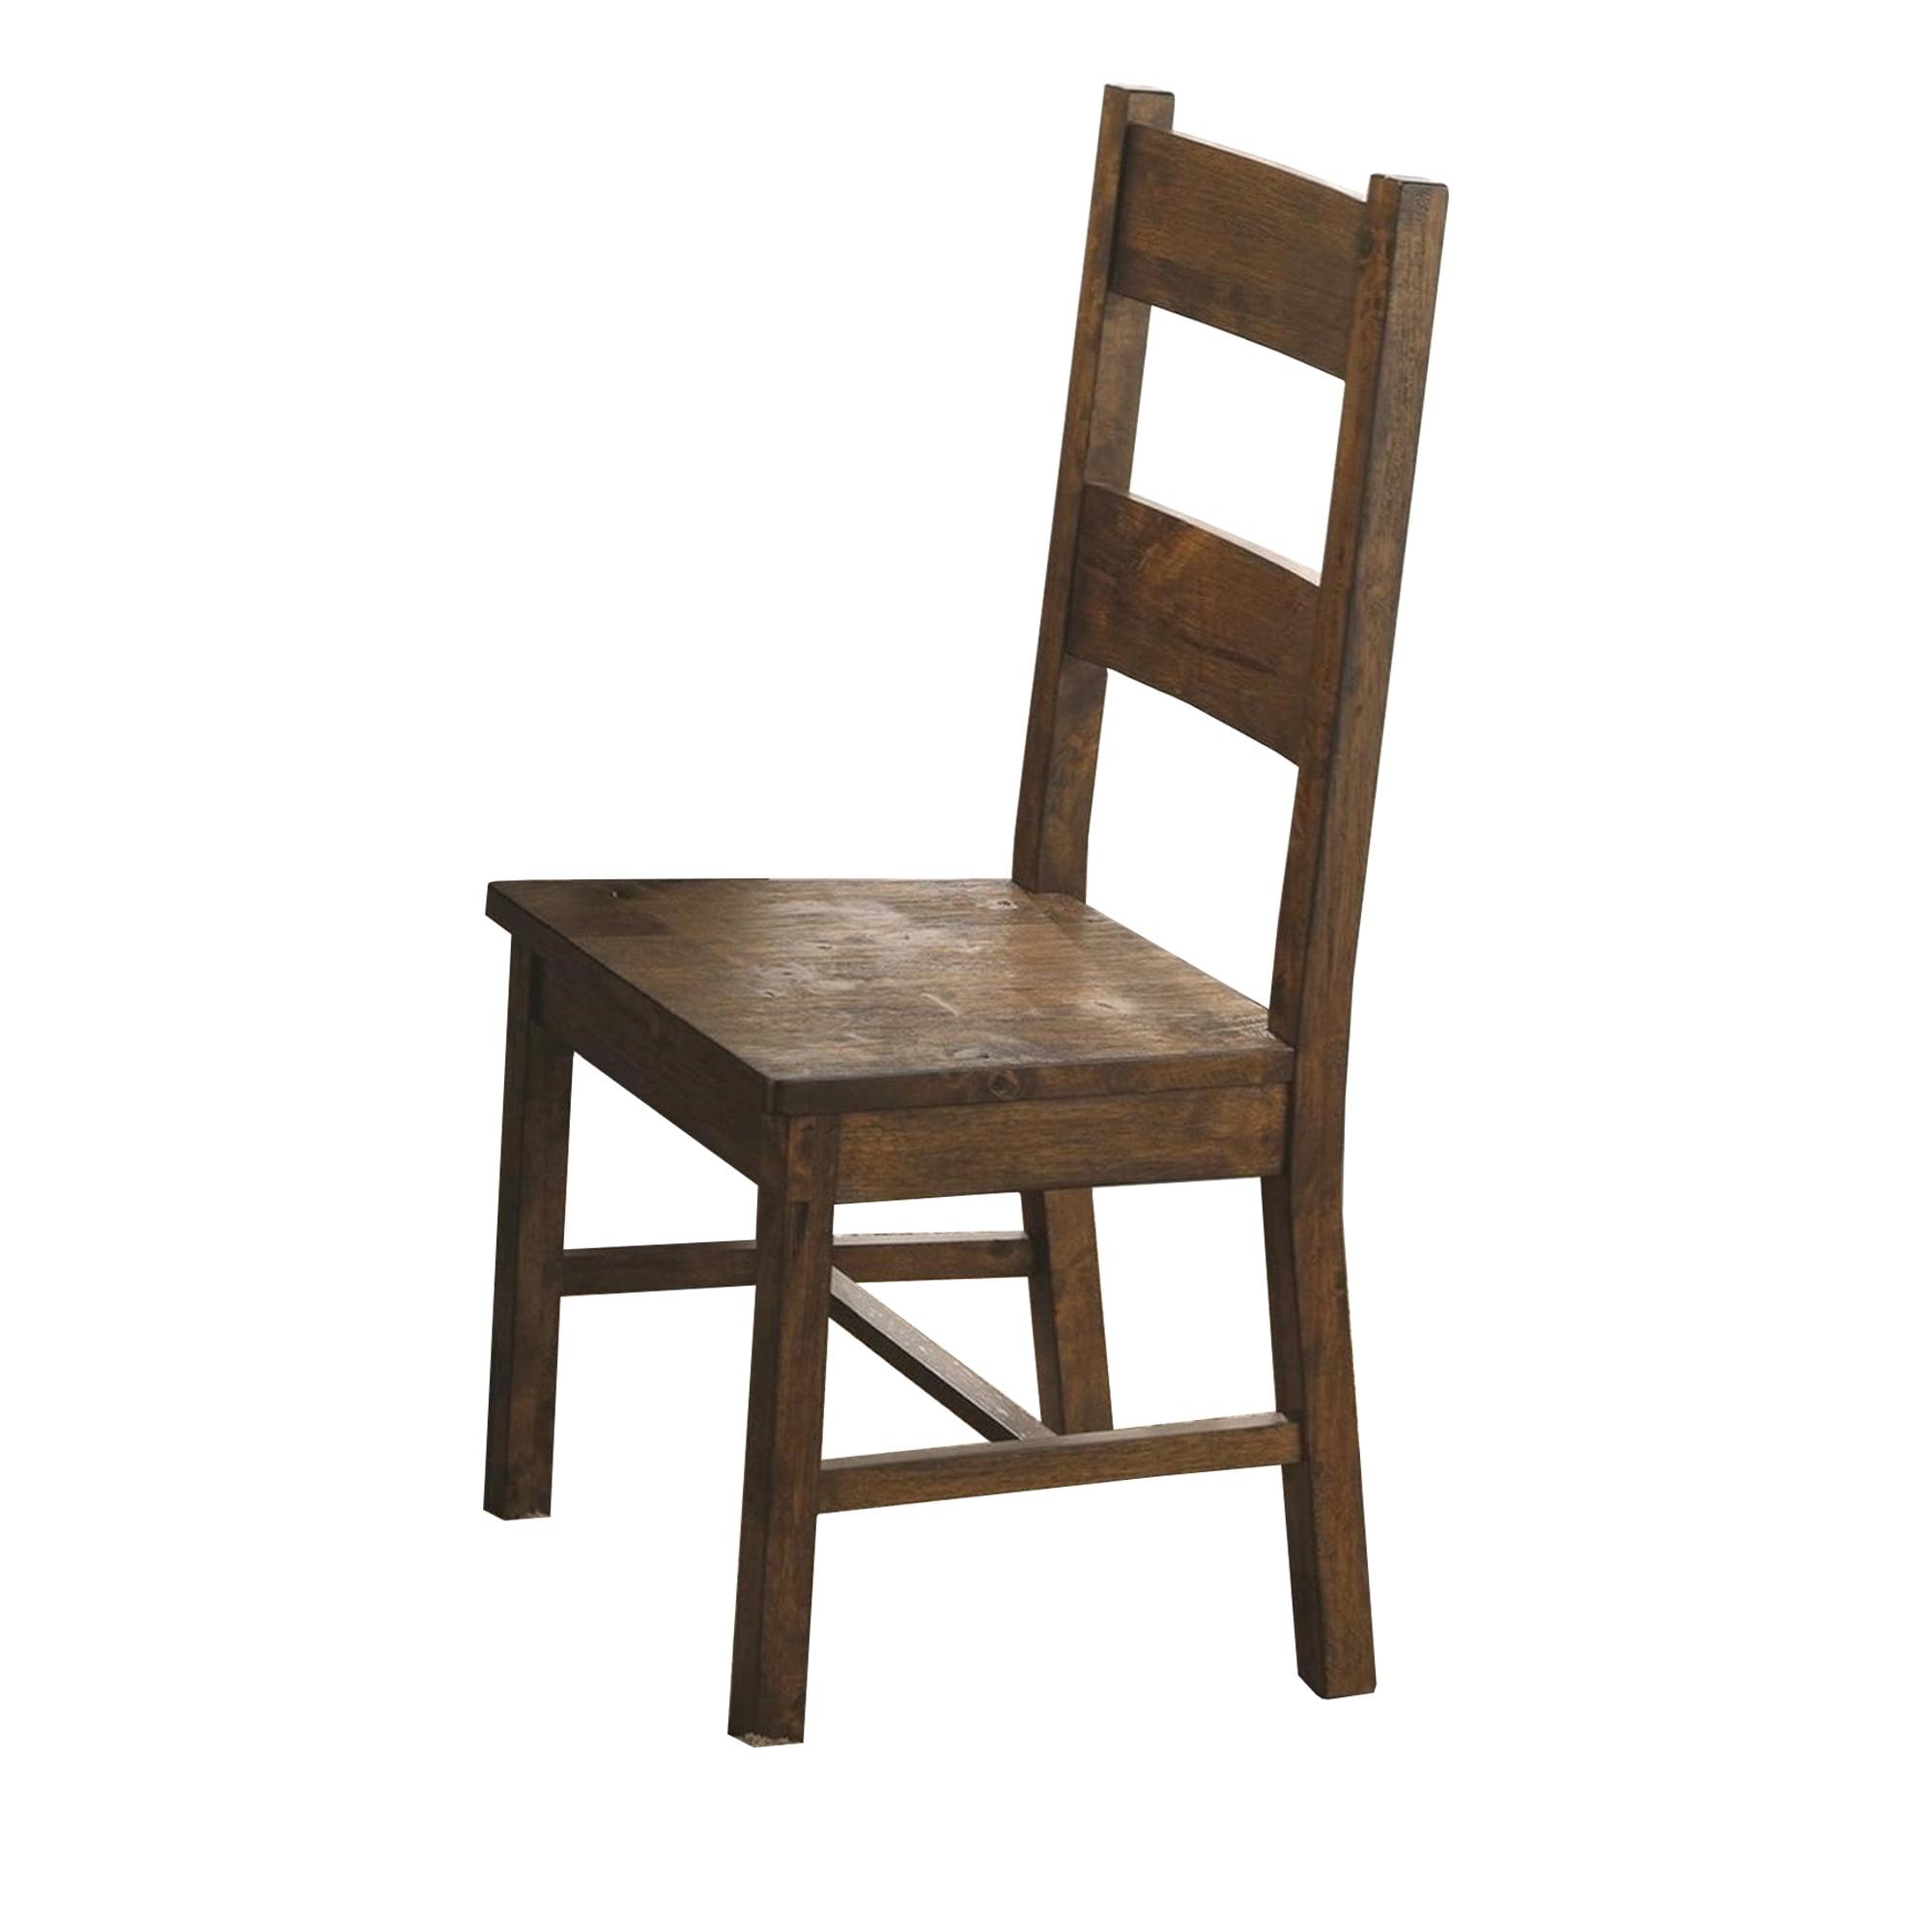 Rustic Golden Brown Wooden Ladderback Side Chair